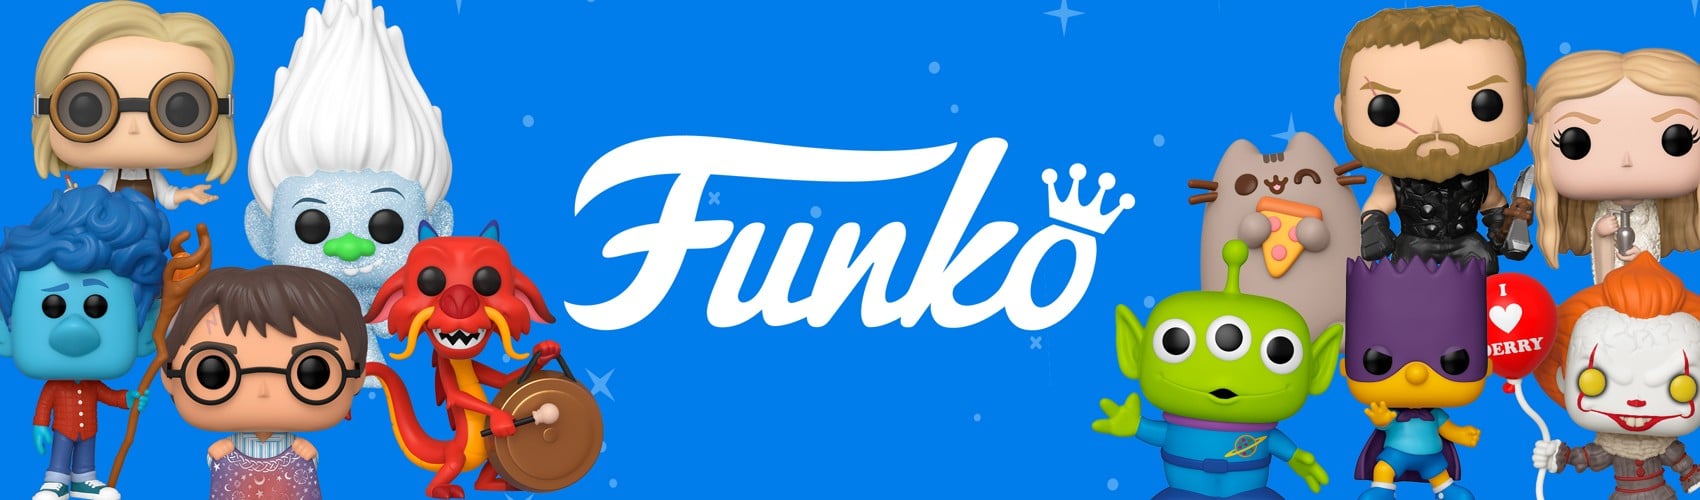 Funko Pop! vinyl figurines are a $686 million dollar business - Vox